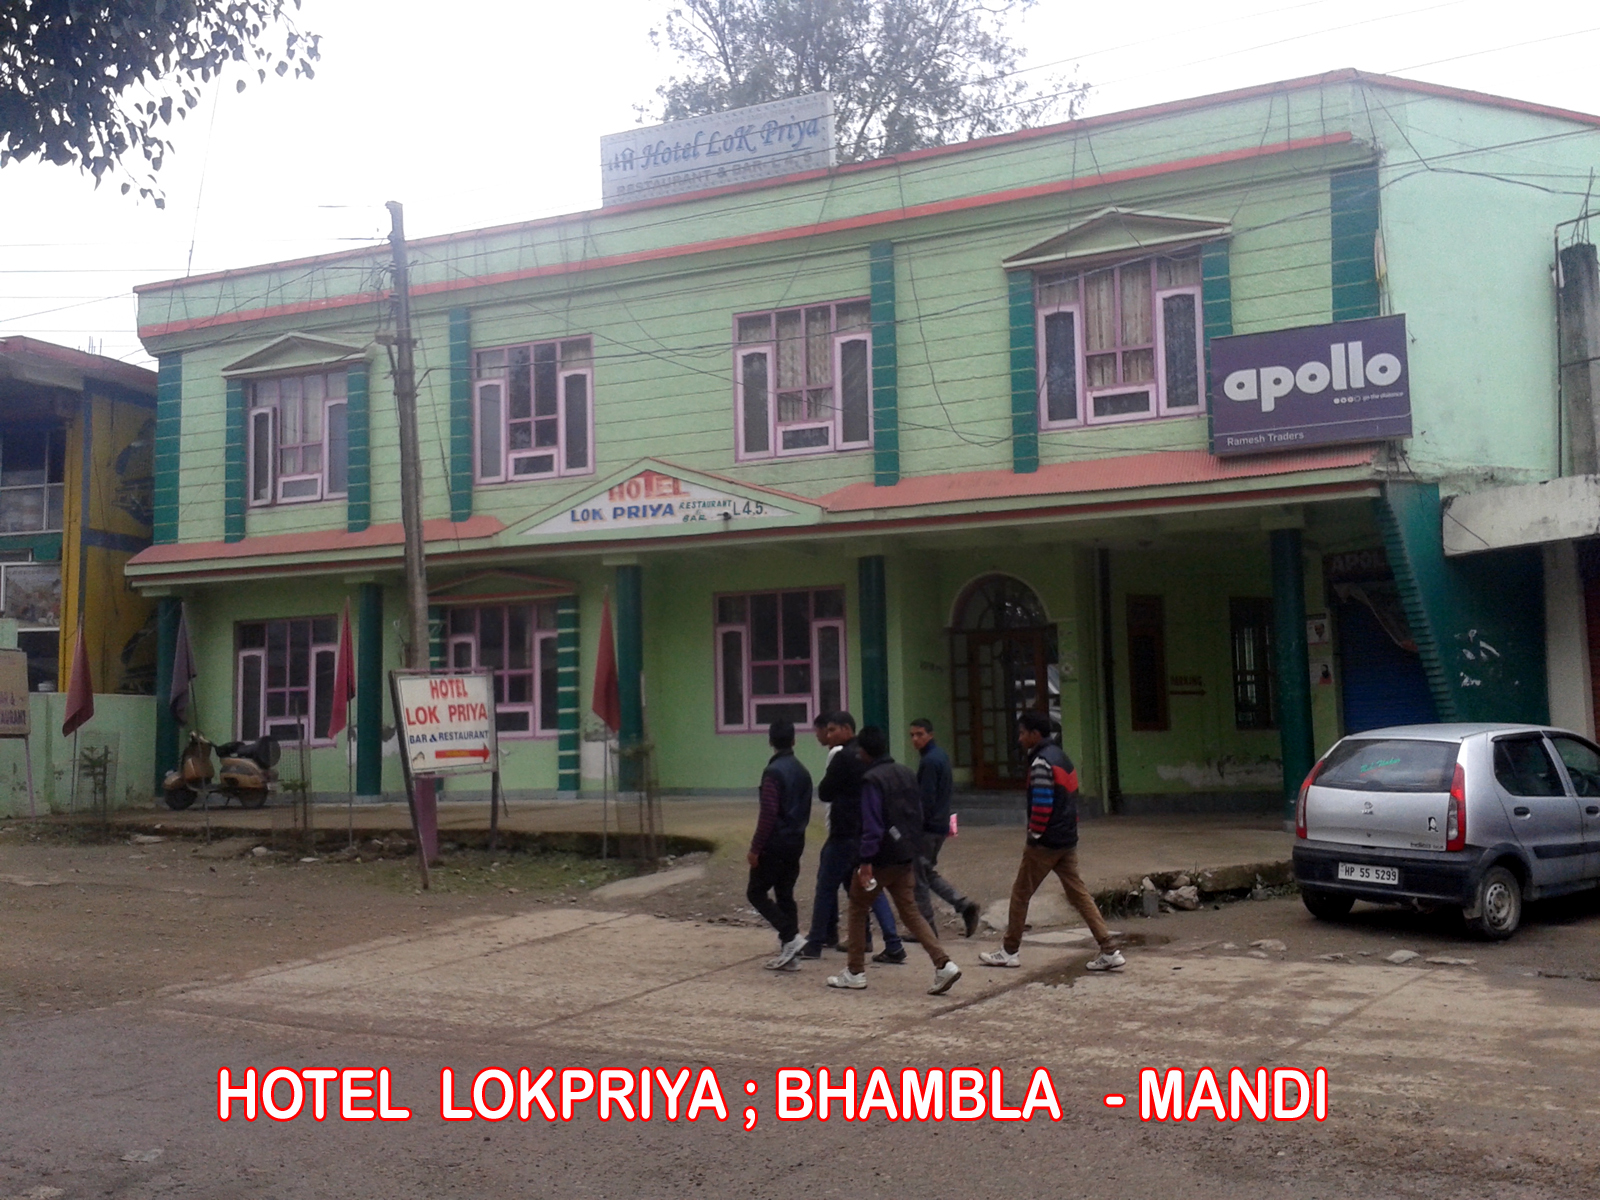 HOTEL LOKPRIYA AT BHAMBLA